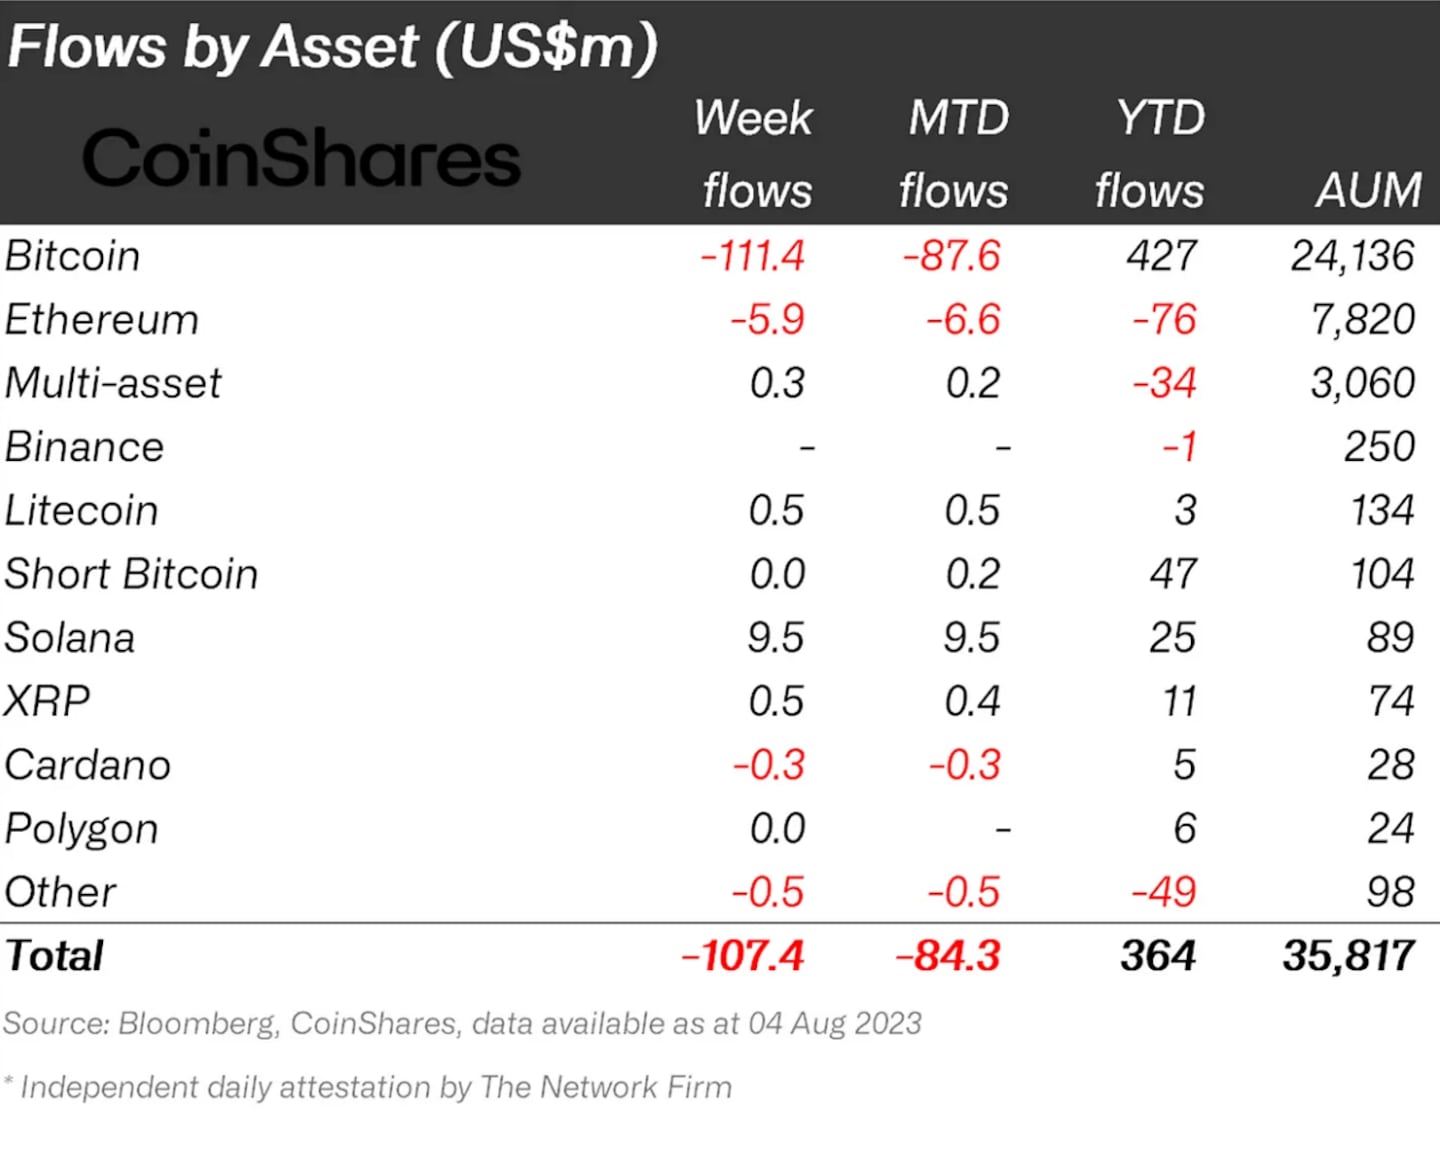 CoinShares weekly digital asset fund flows broken down by asset